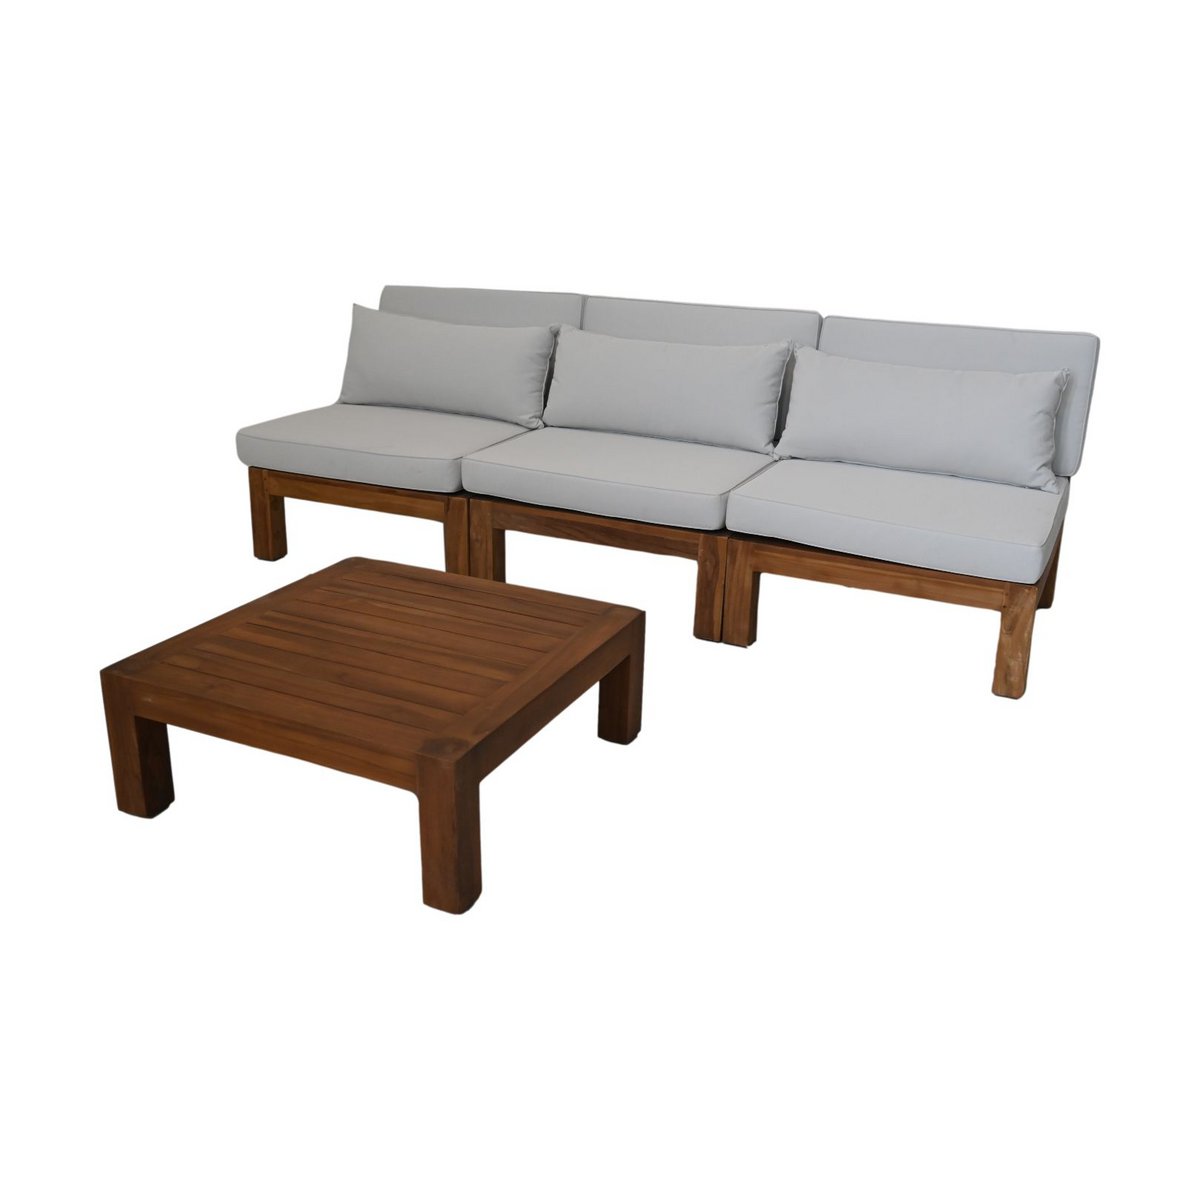 Aruba 4-piece garden lounge set (cushions included) - Natural/White - Teak